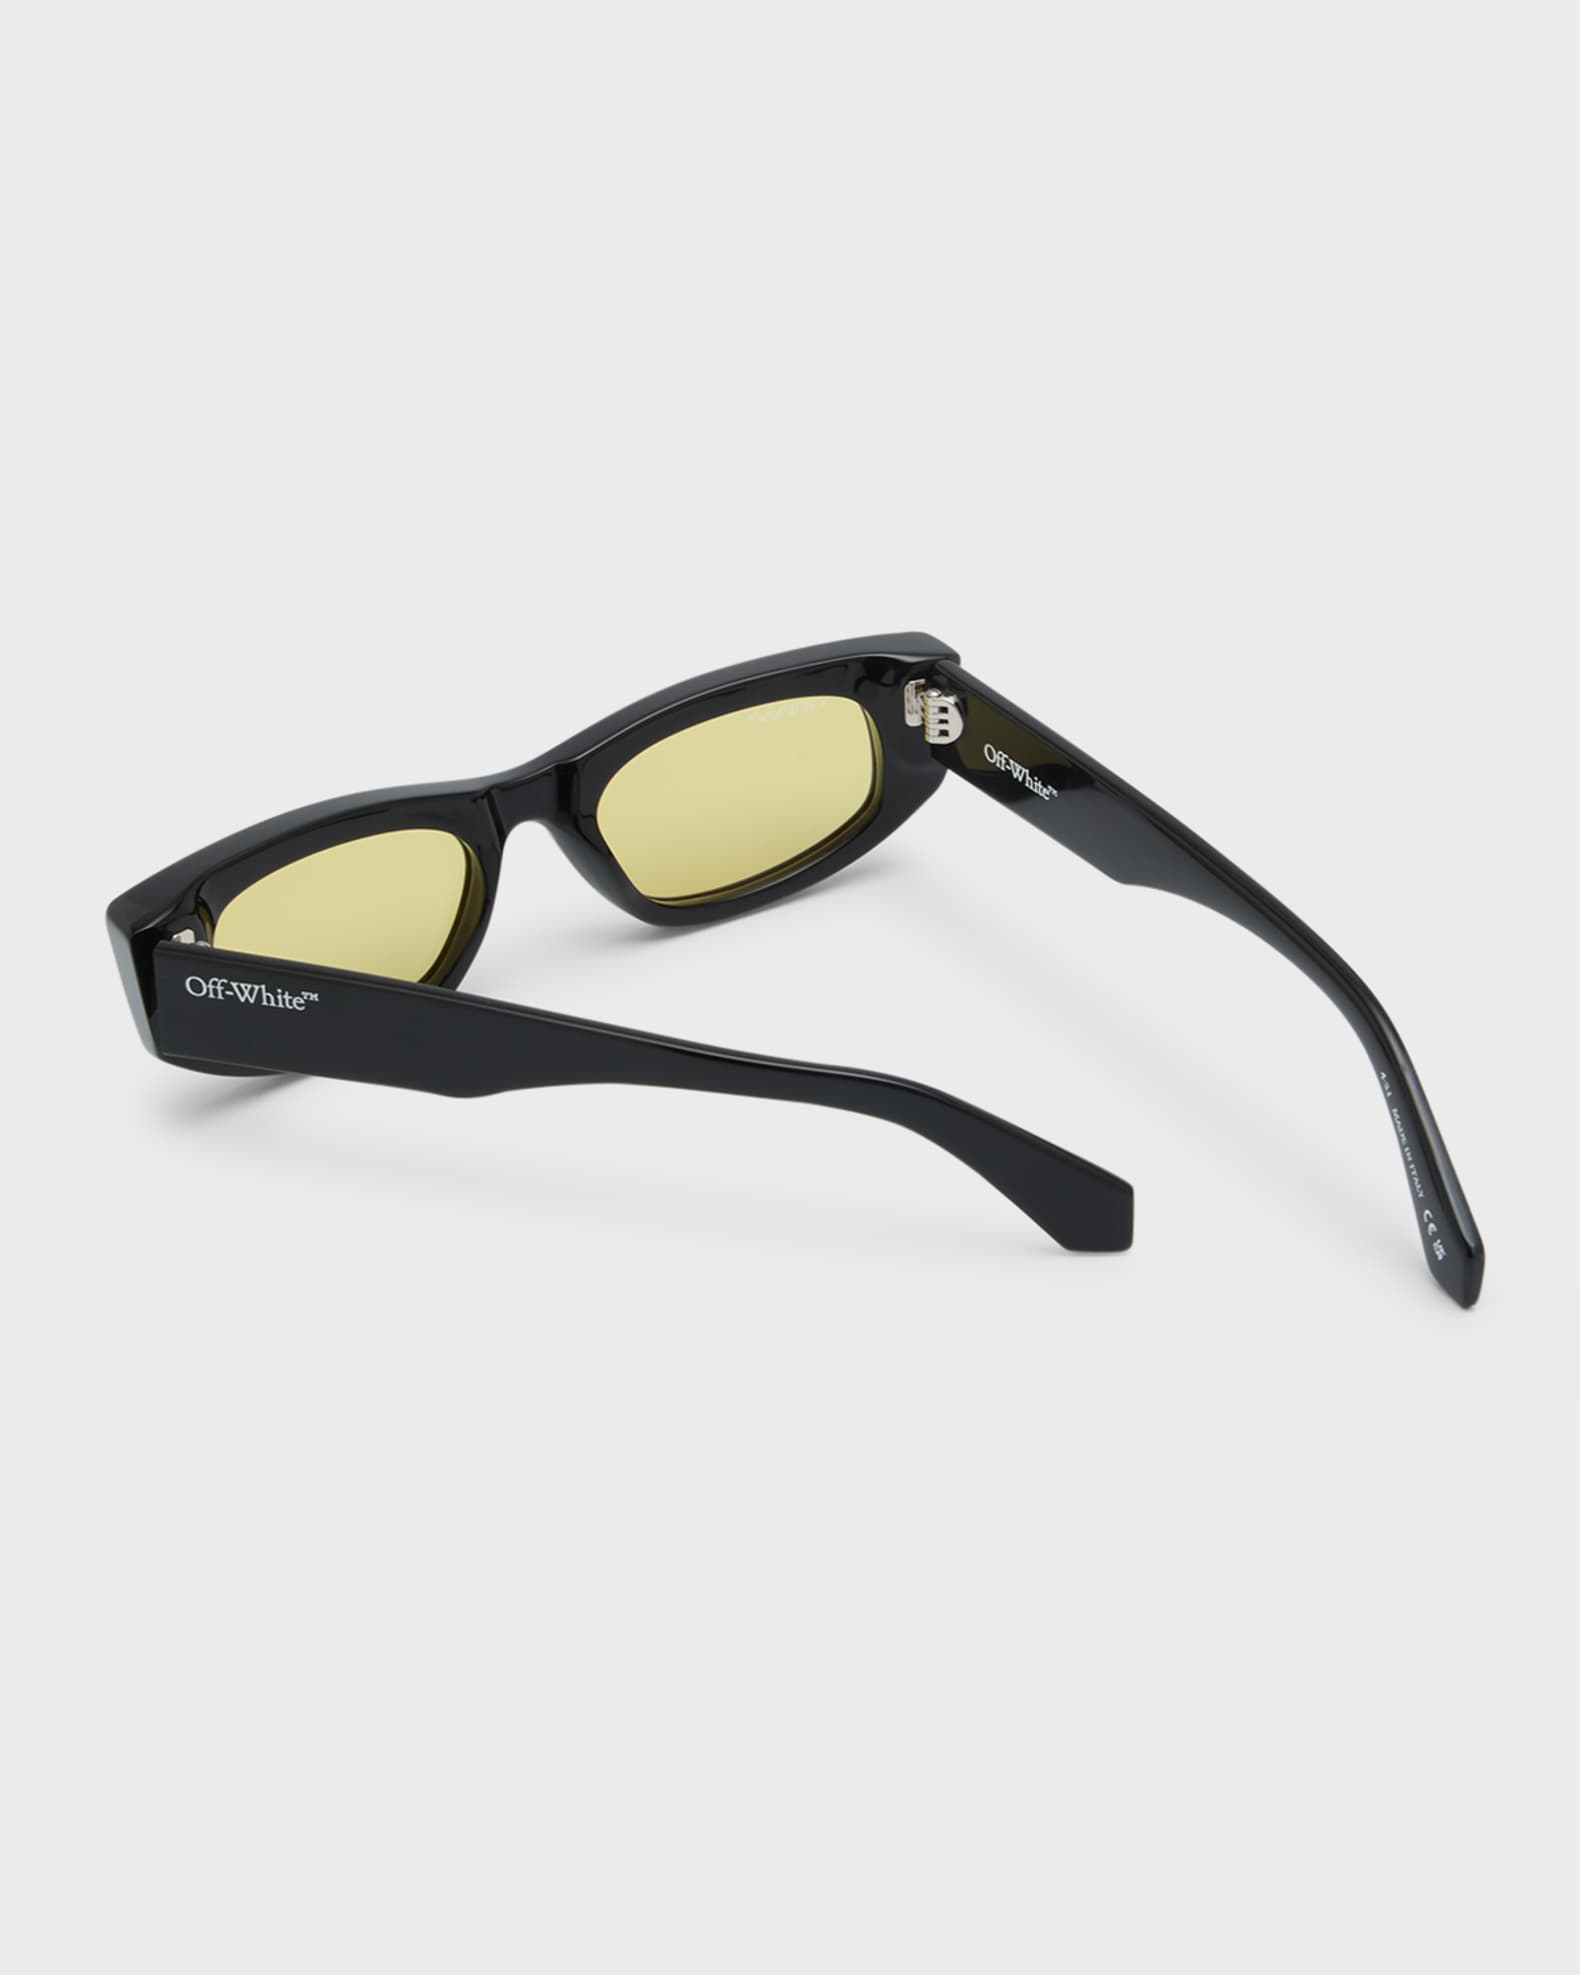 Matera Sunglasses in black